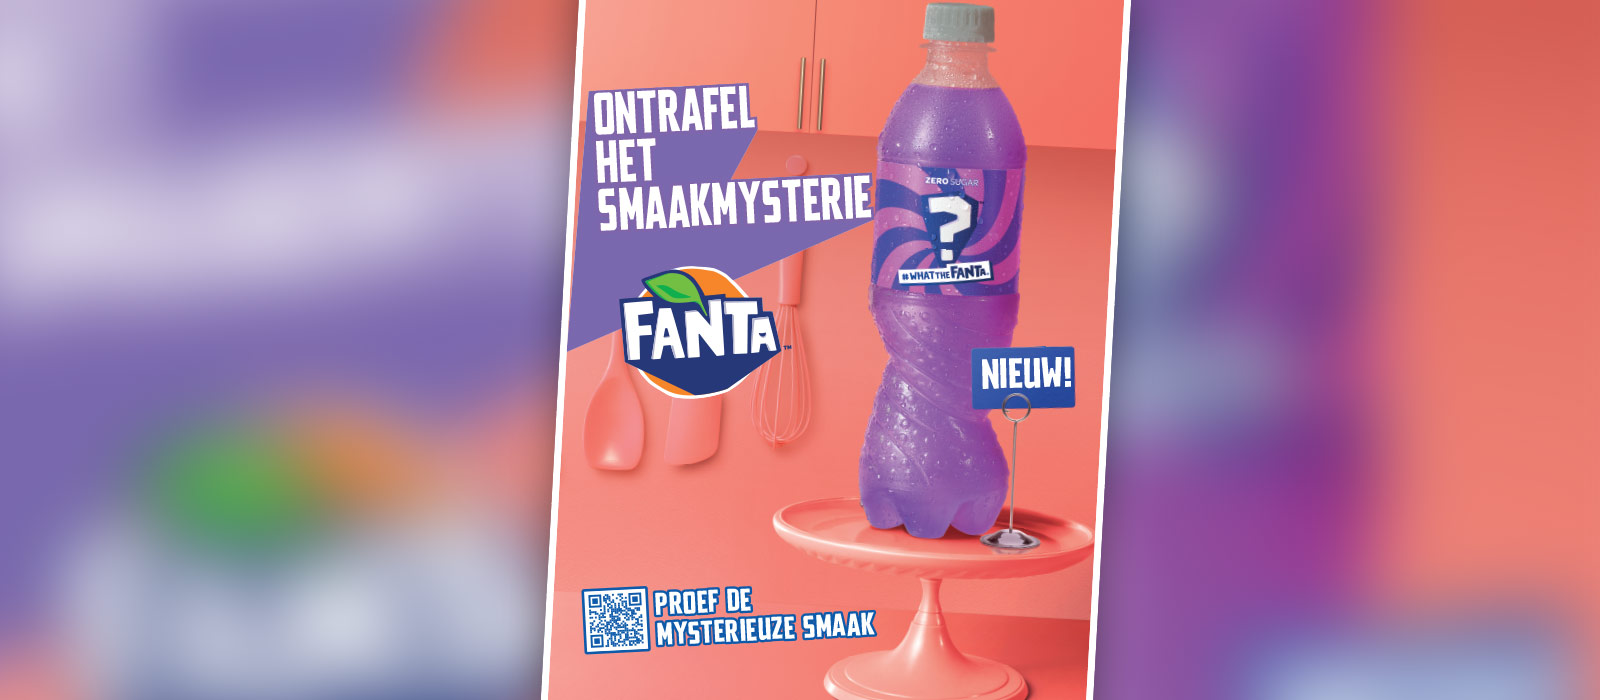 Ontrafel het smaakmysterie - What The Fanta paarse fles